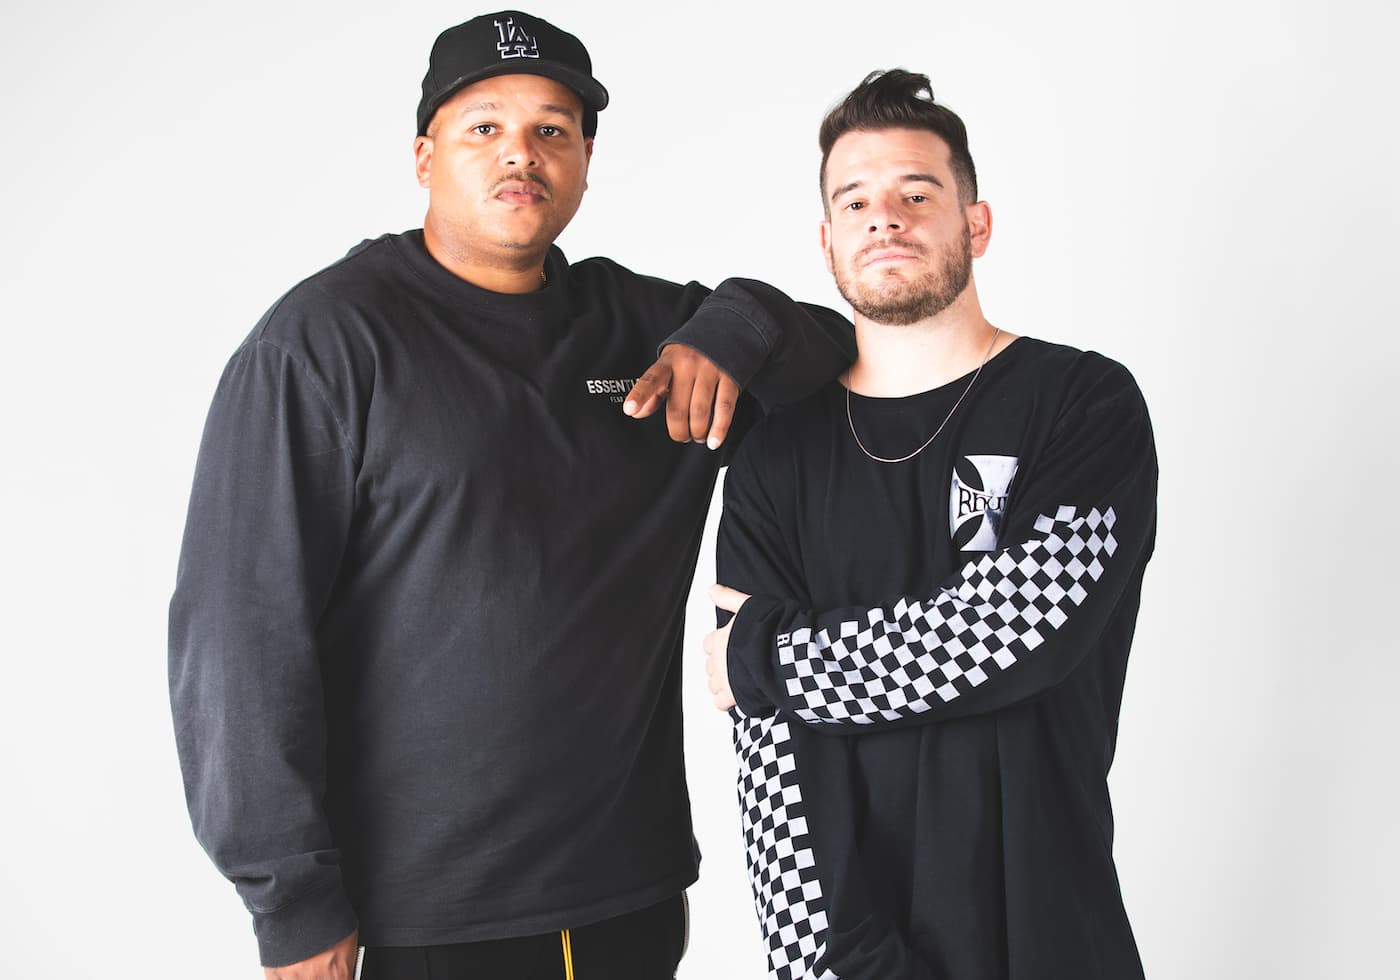 Dominic DJ Jordan and Jimmy Giannos